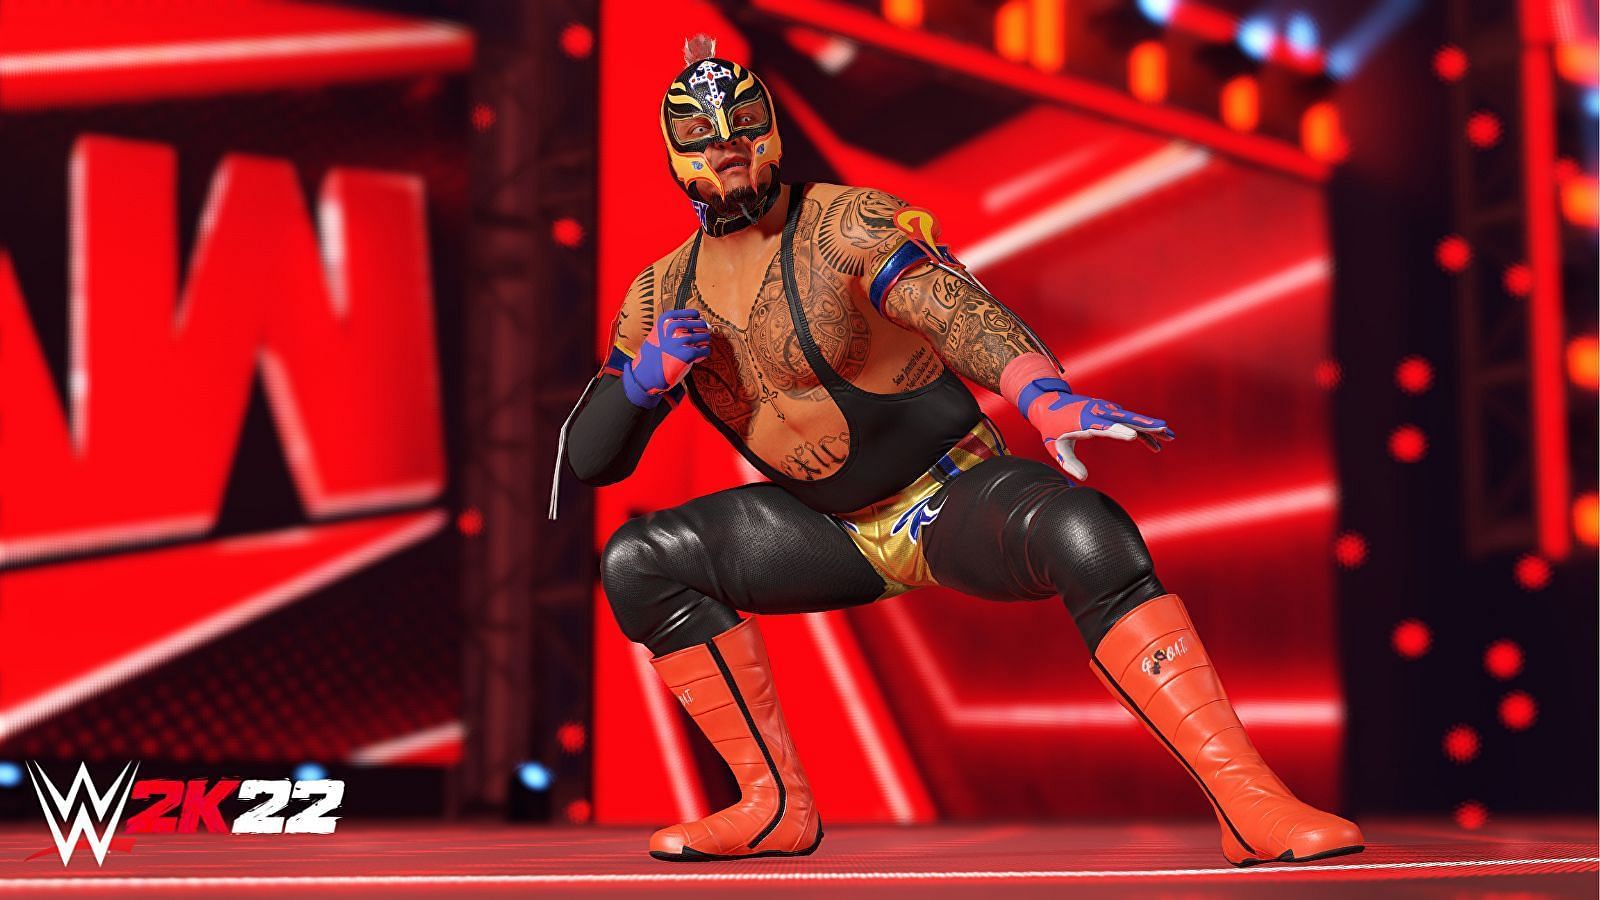 New video reveals major gameplay details WWE 2K22